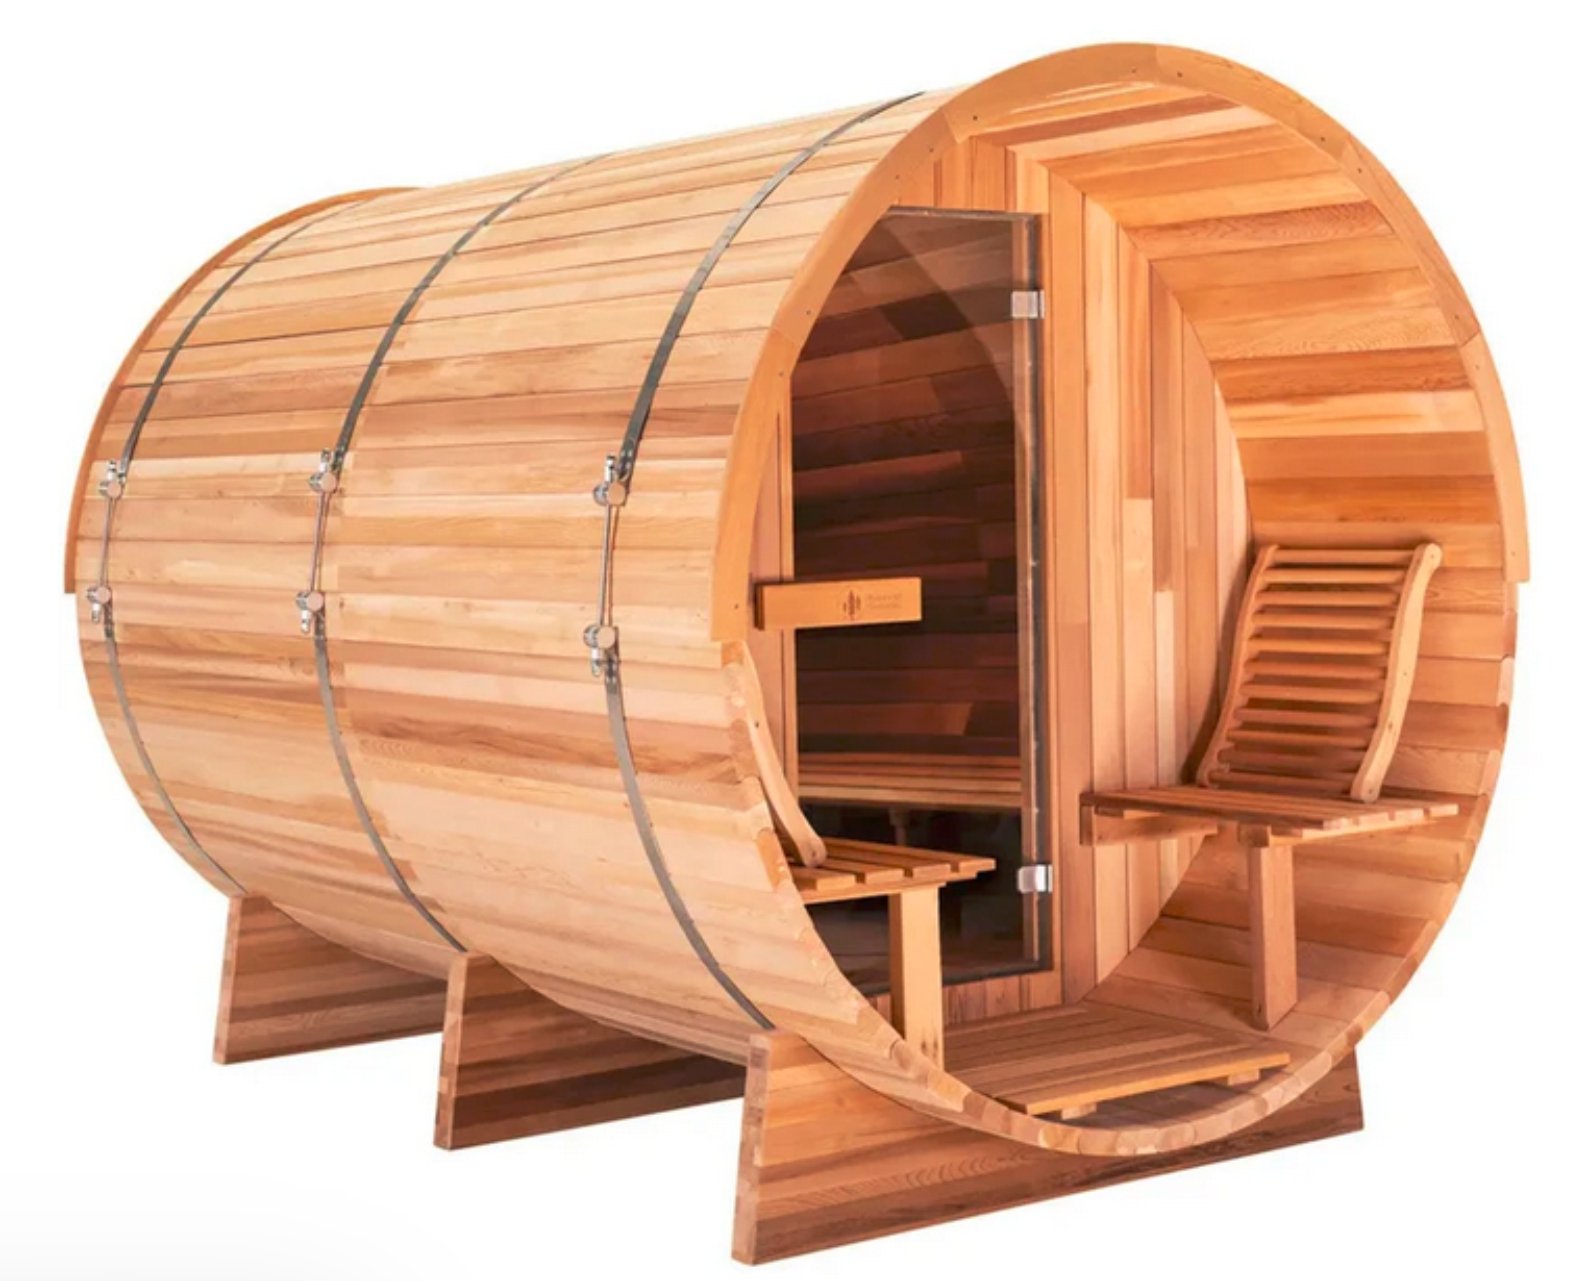 8' Red Cedar Sauna with Porch